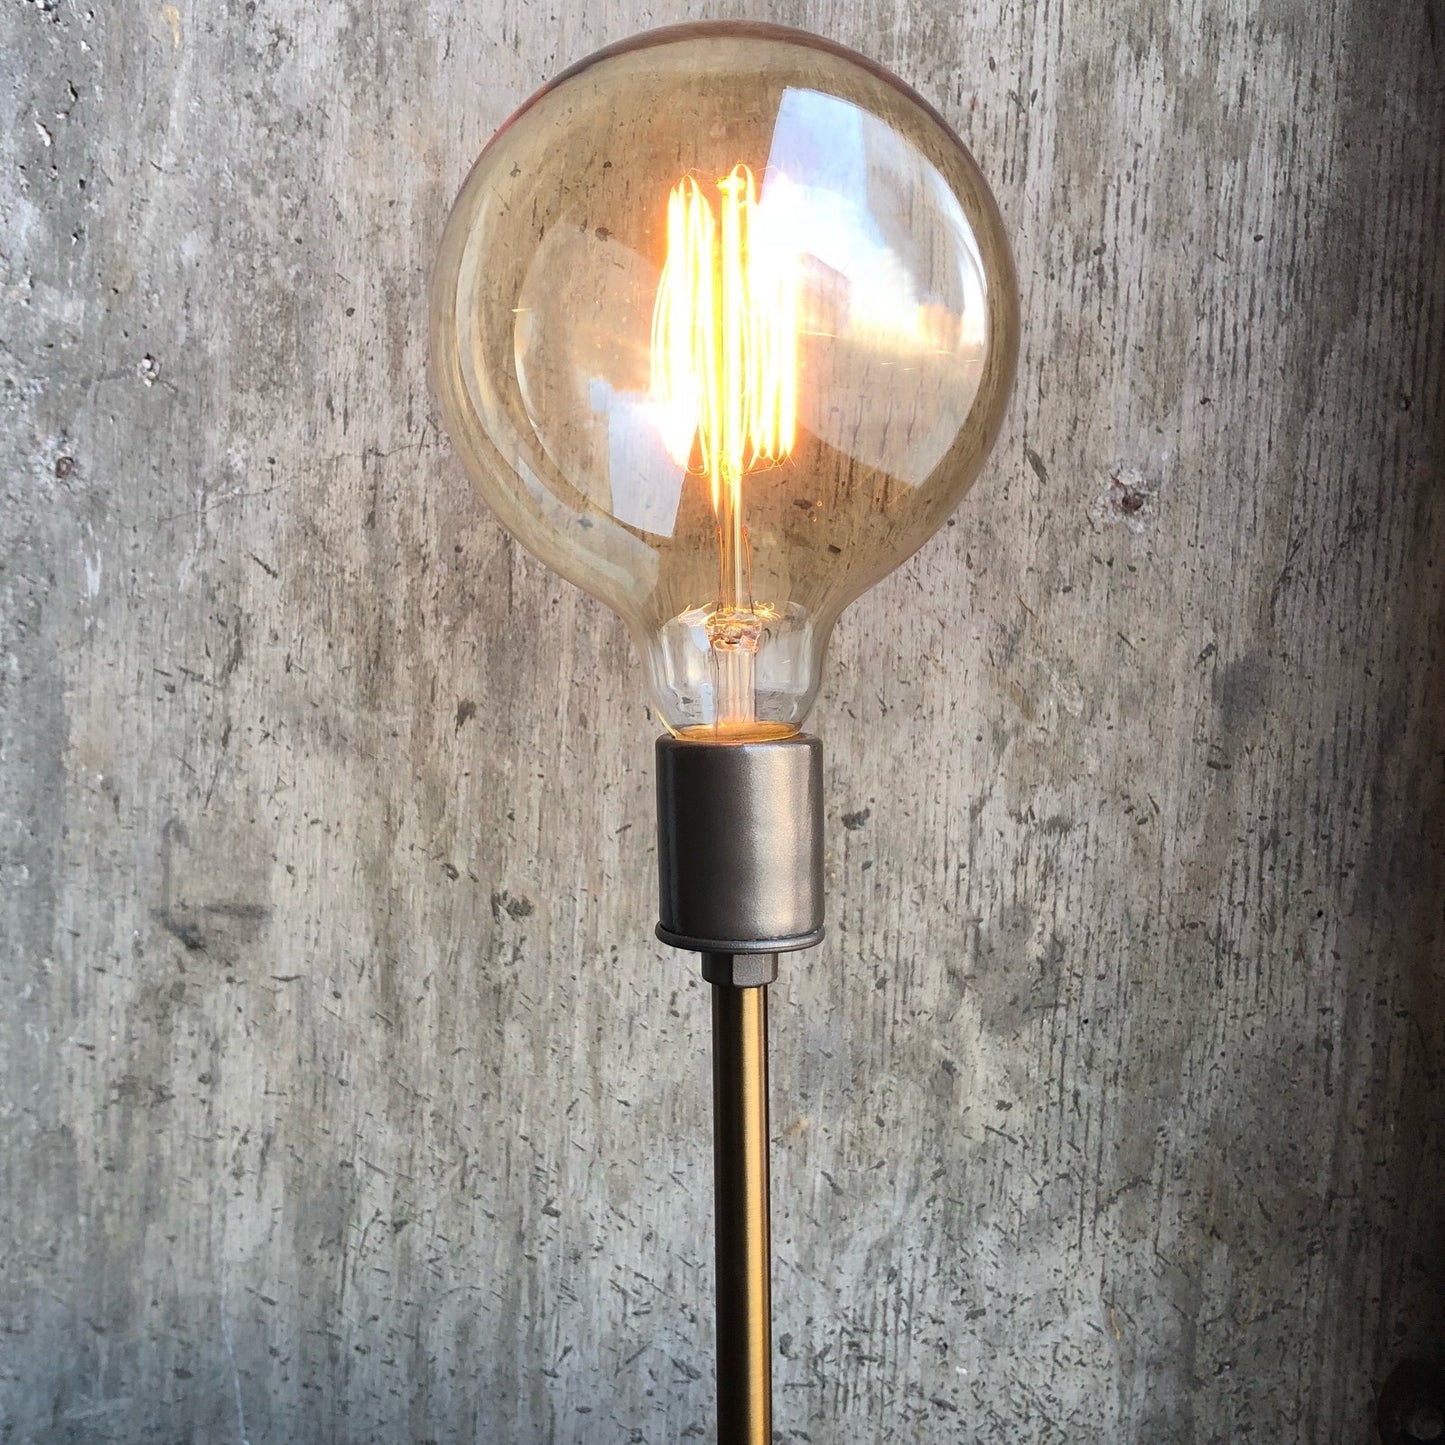 Mr Fox // Tall Brass Lamp